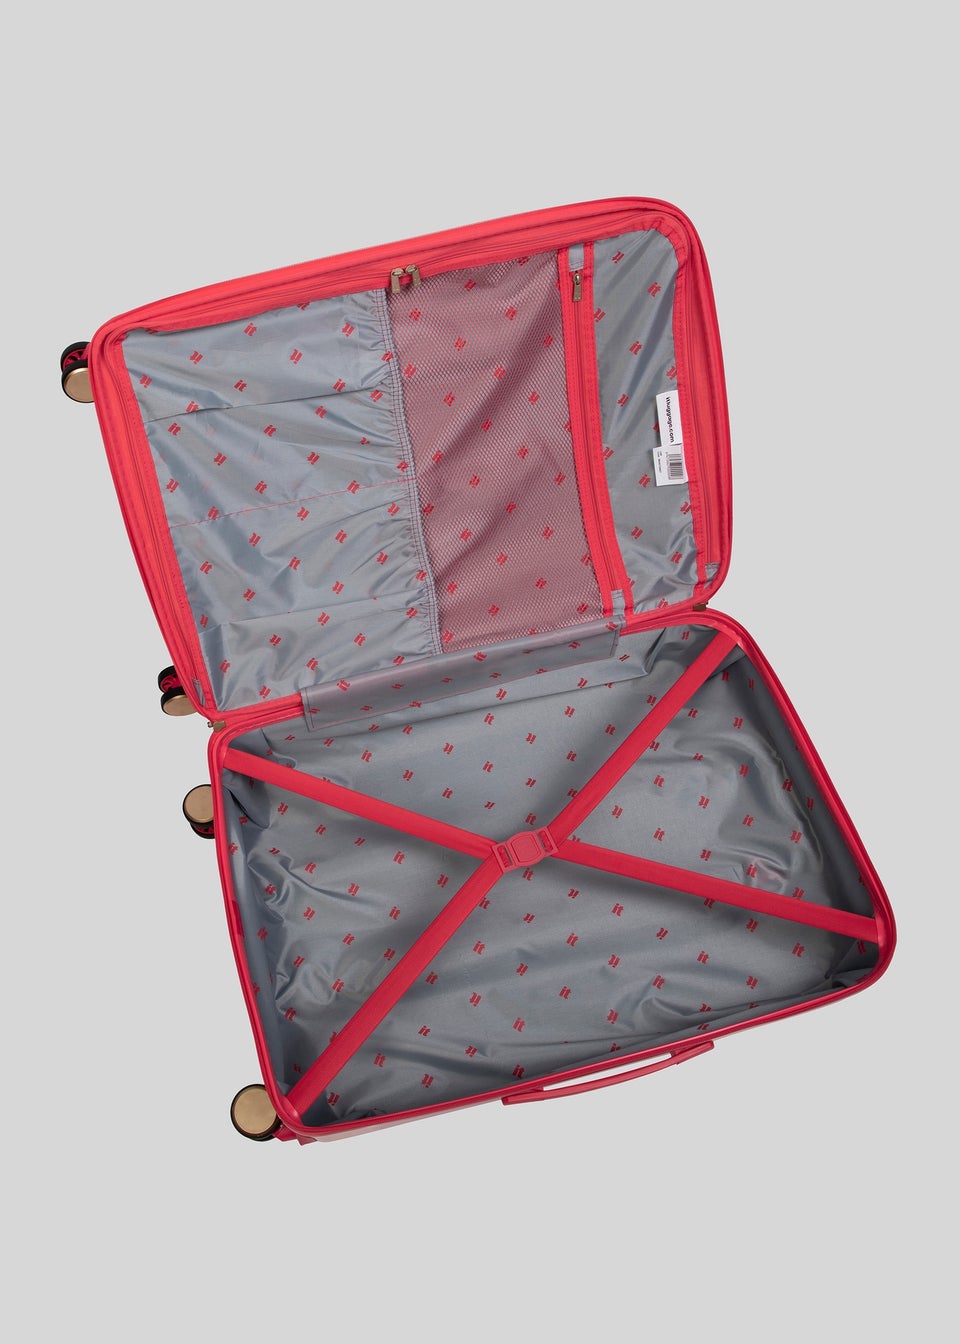 IT Luggage Multicolour Ombre Print Suitcase